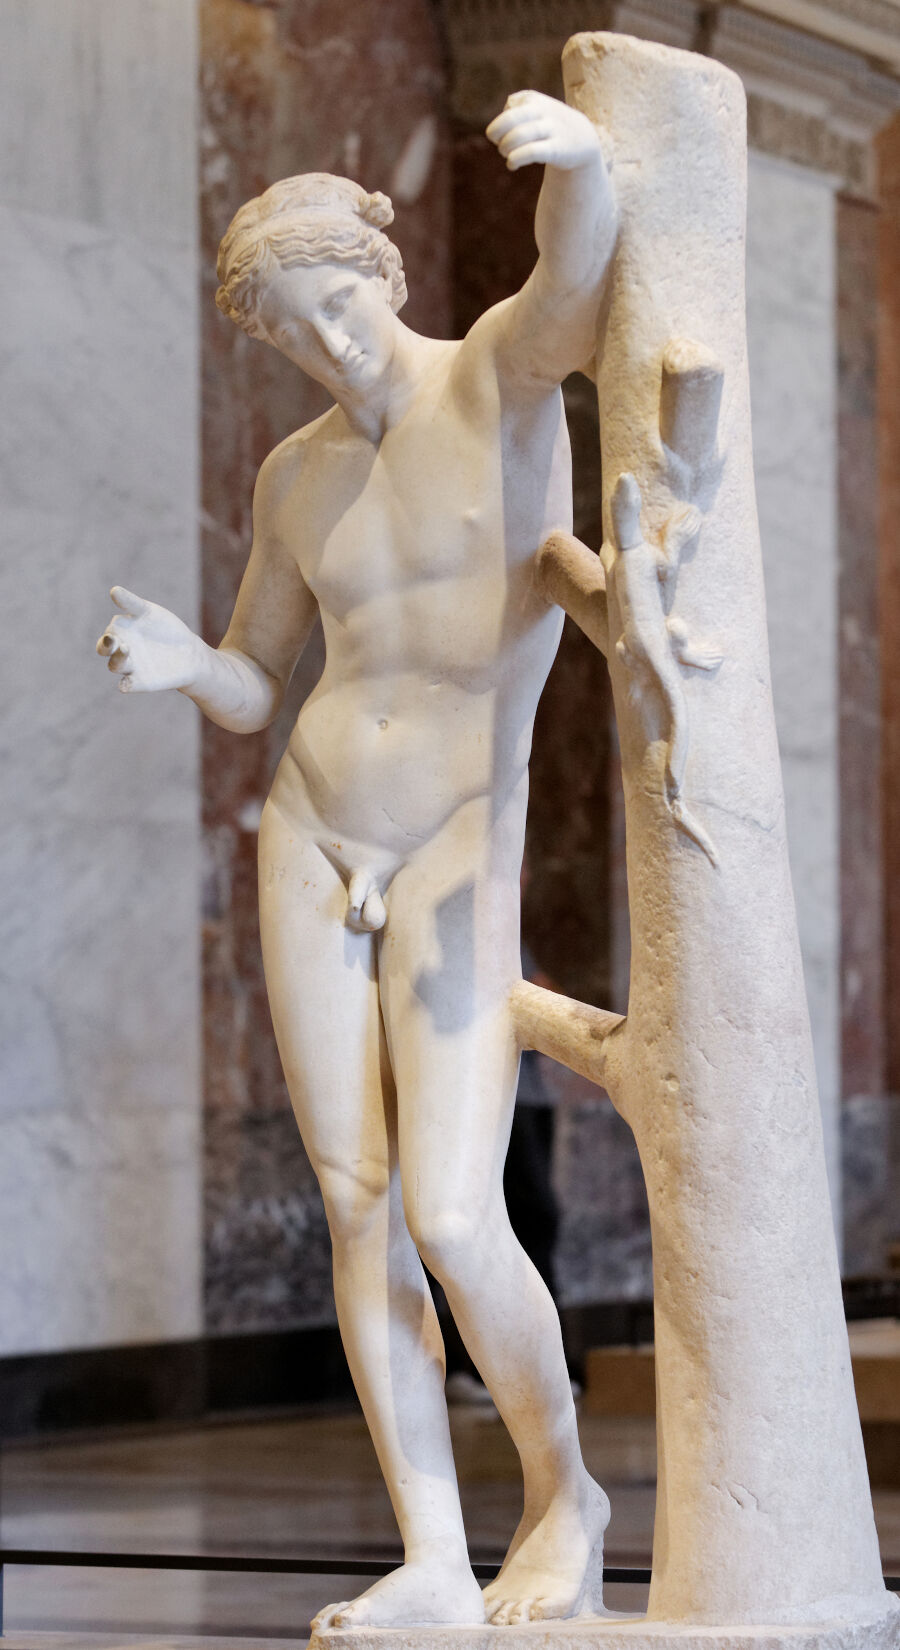 Apollon Sauroctone, the Louvre, Paris, inv. MR 78, Ma 44, Marie-Lan Nguyen /Wikimedia Commons CC BY